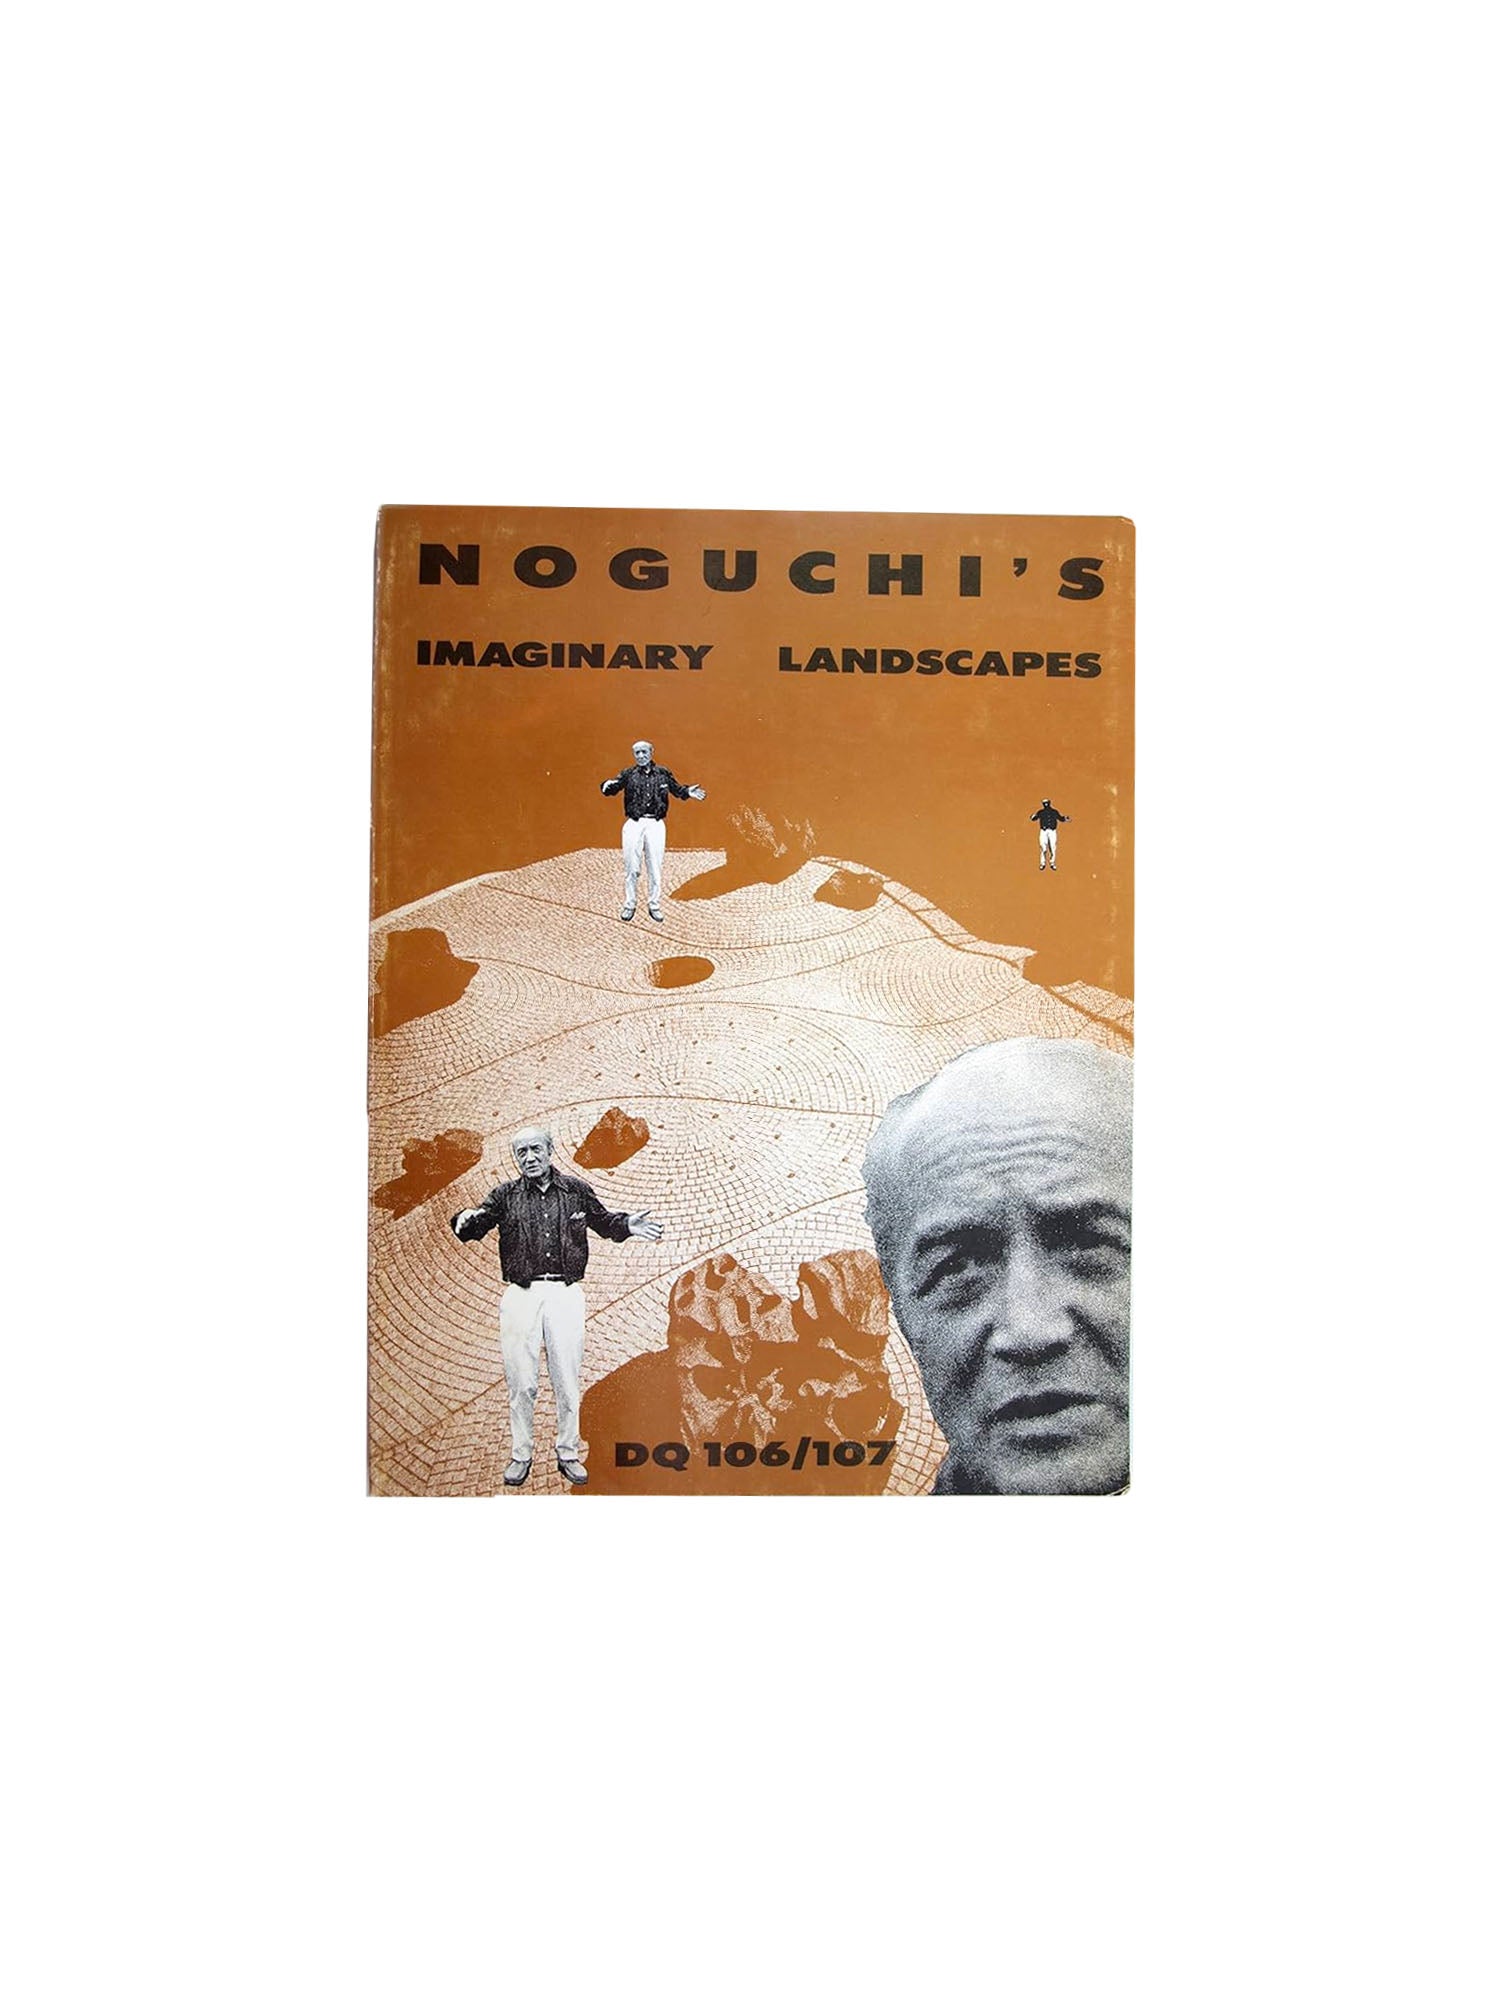 Noguchi's Imaginary Landscape